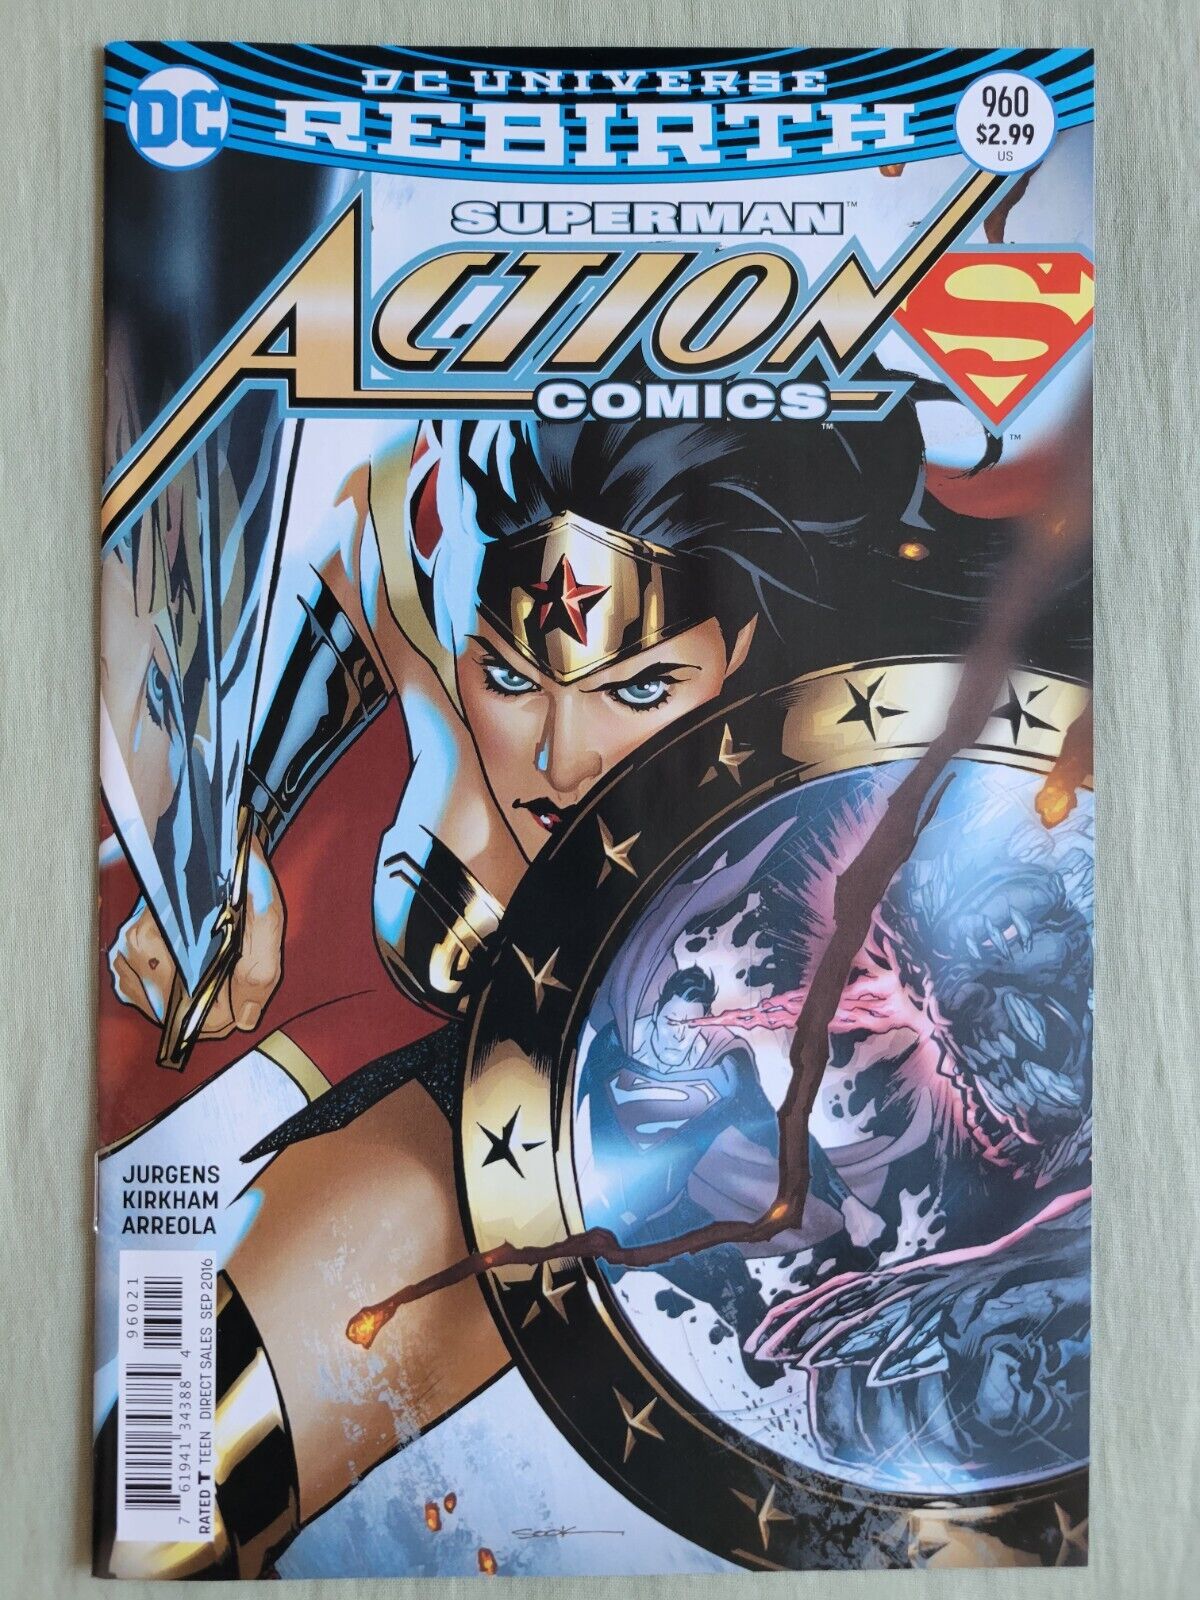 Action Comics Vol. 1 #960 (Path of Doom; VARIANT Cover)